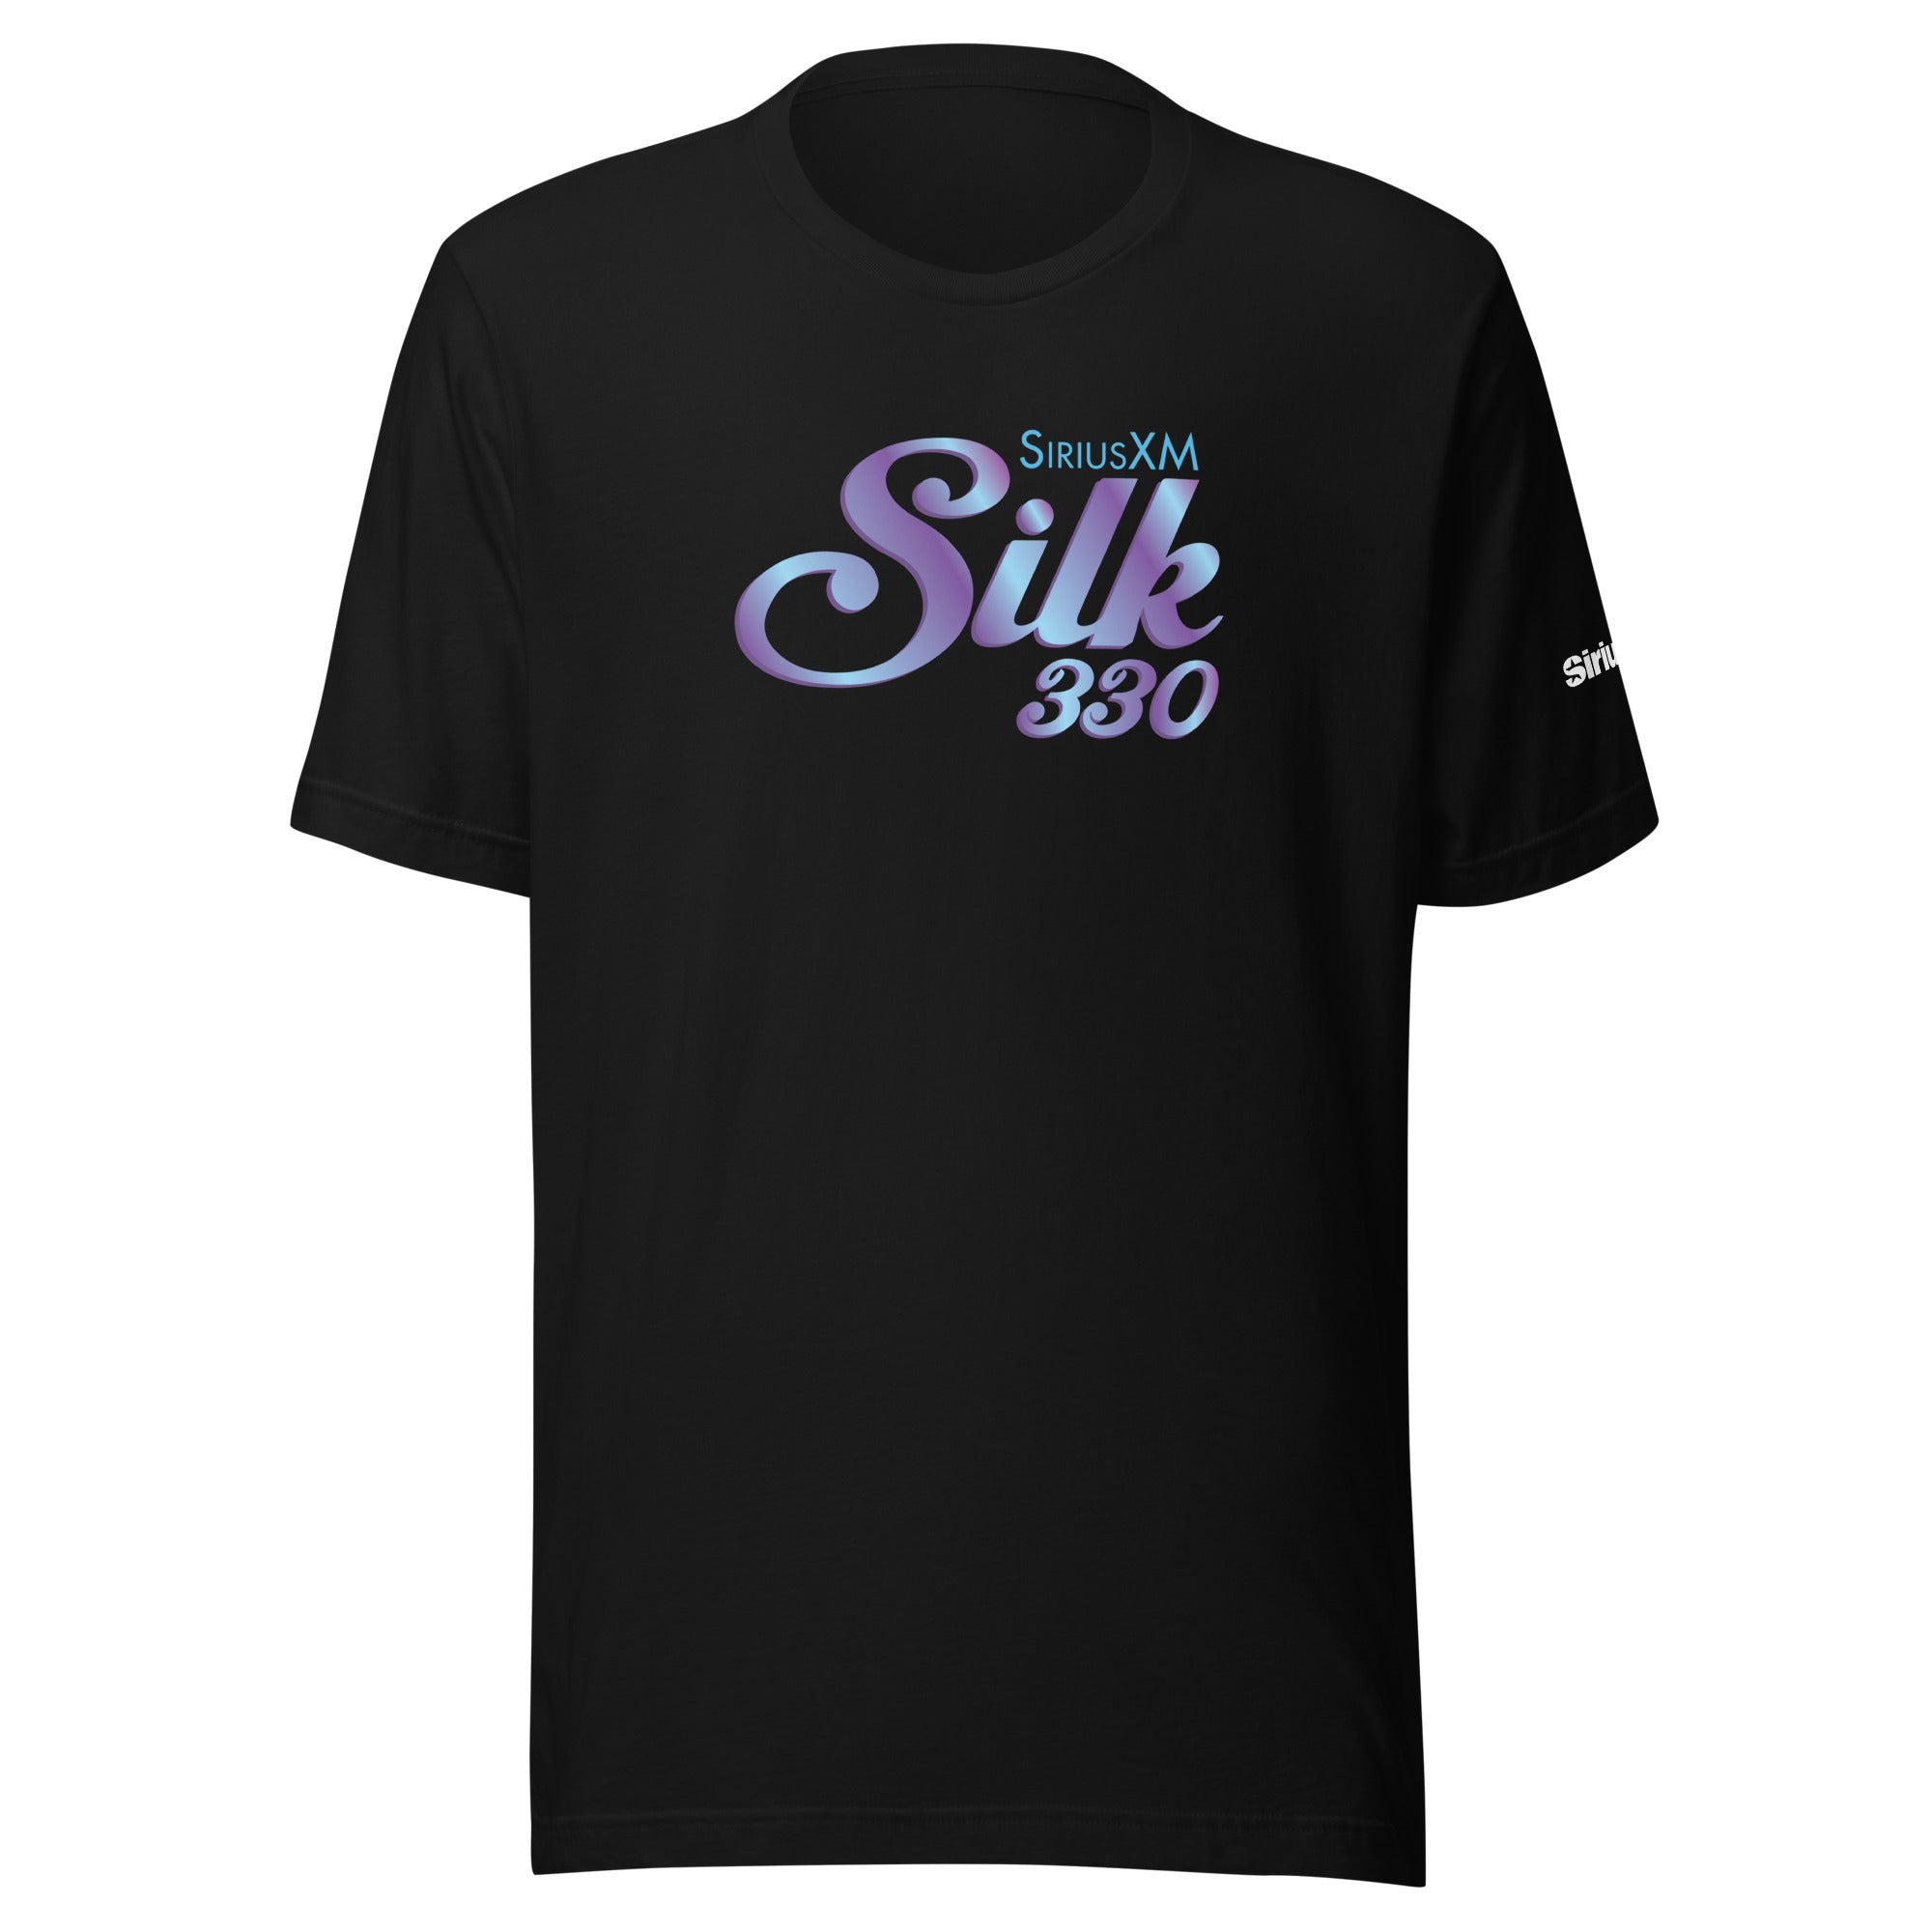 SiriusXM Silk: T-shirt (Black)